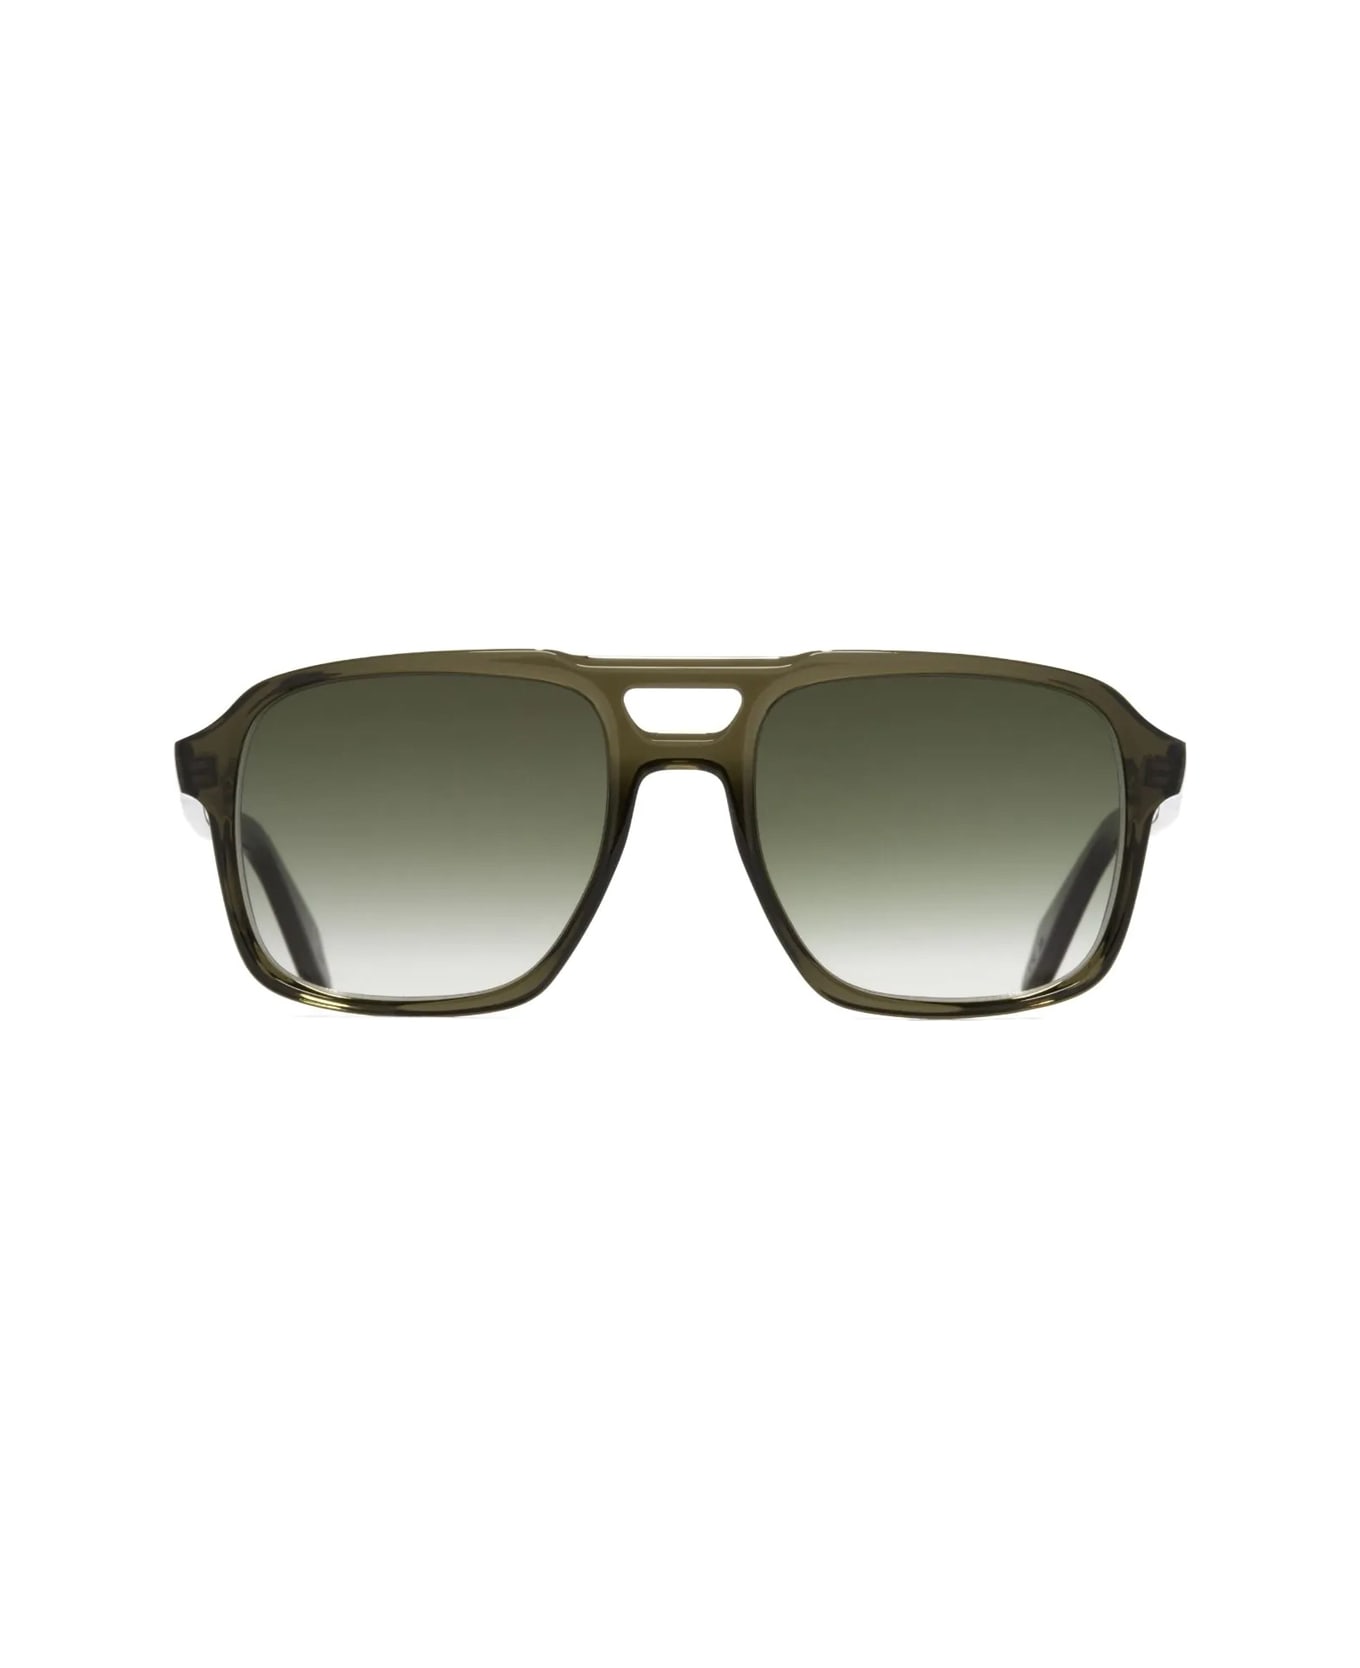 Cutler and Gross 1394 09 Sunglasses - Verde サングラス